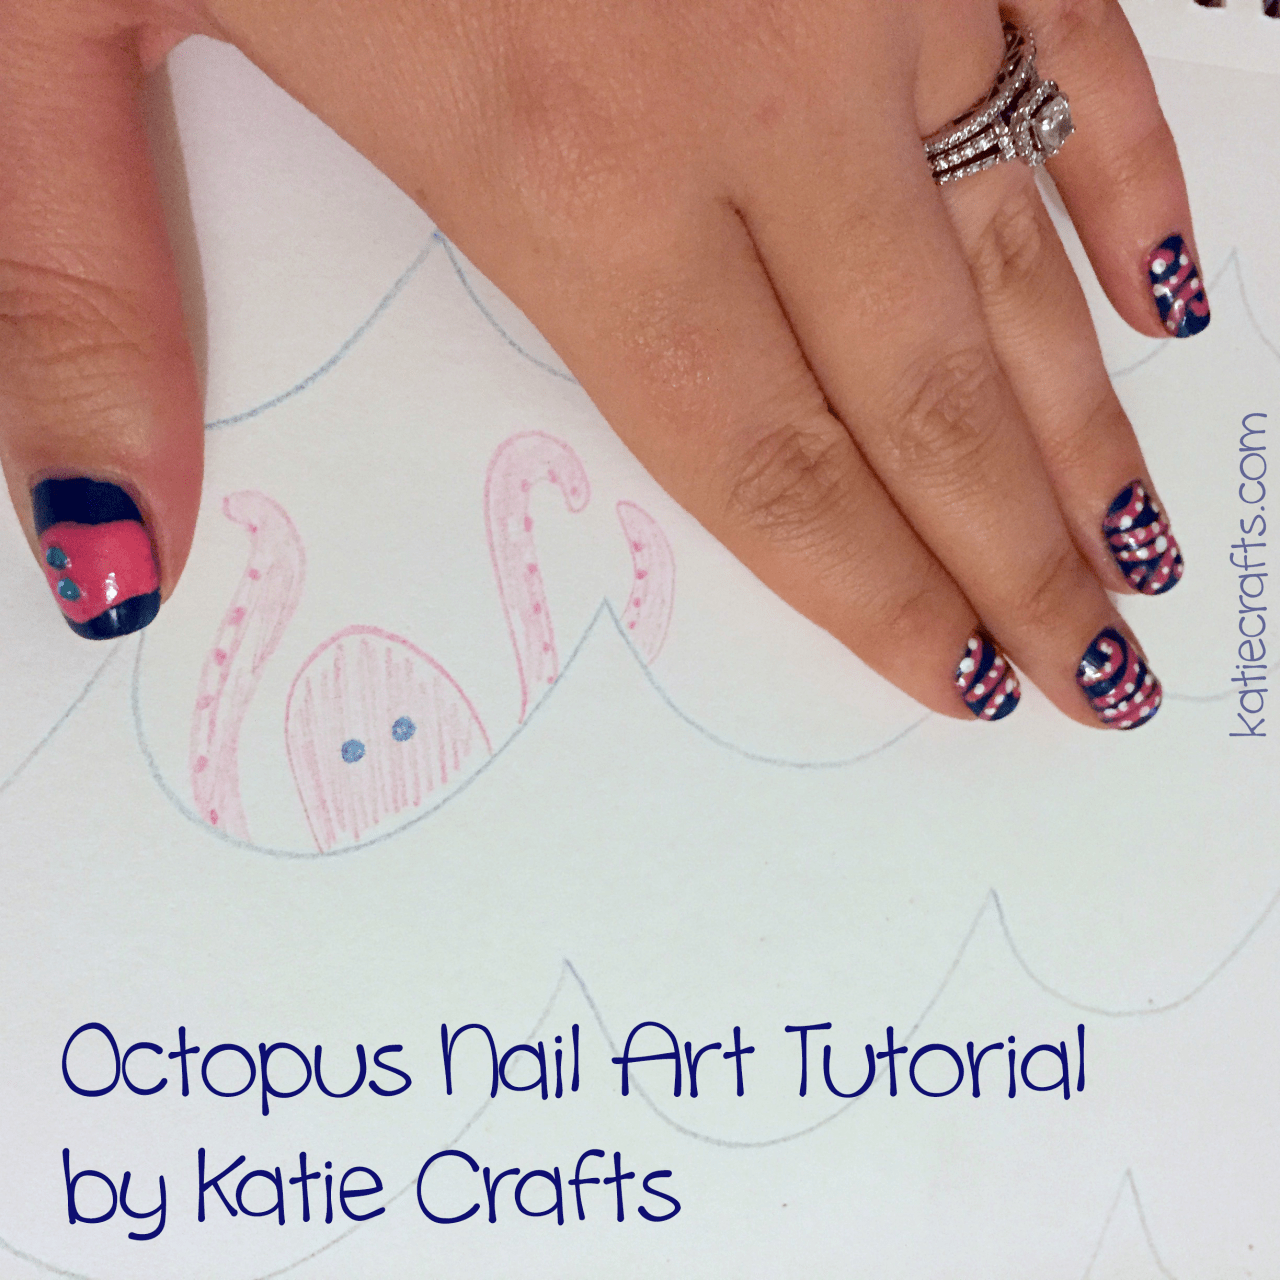 Octopus Nail Art Tutorial by Katie Crafts; https://www.katiecrafts.com